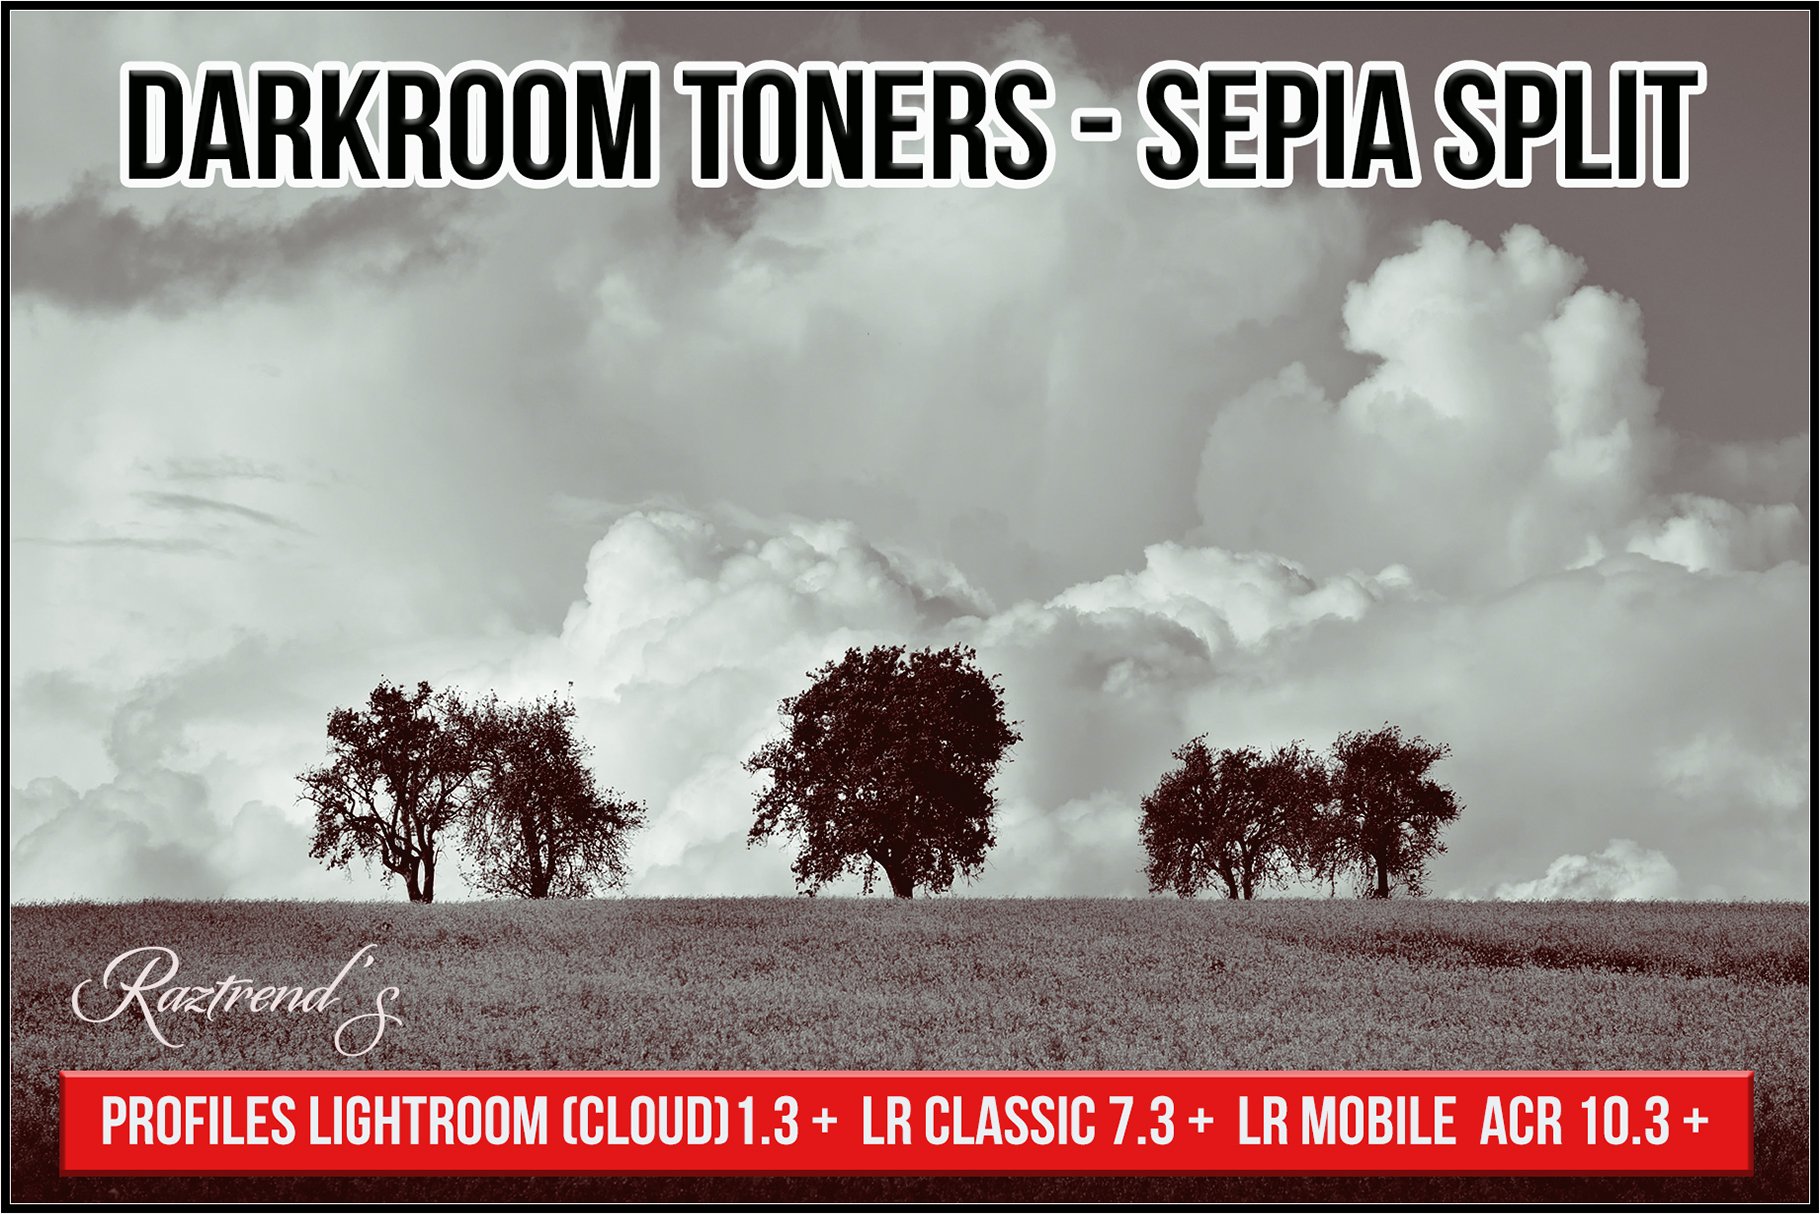 Darkroom Toners - Sepia Splitcover image.